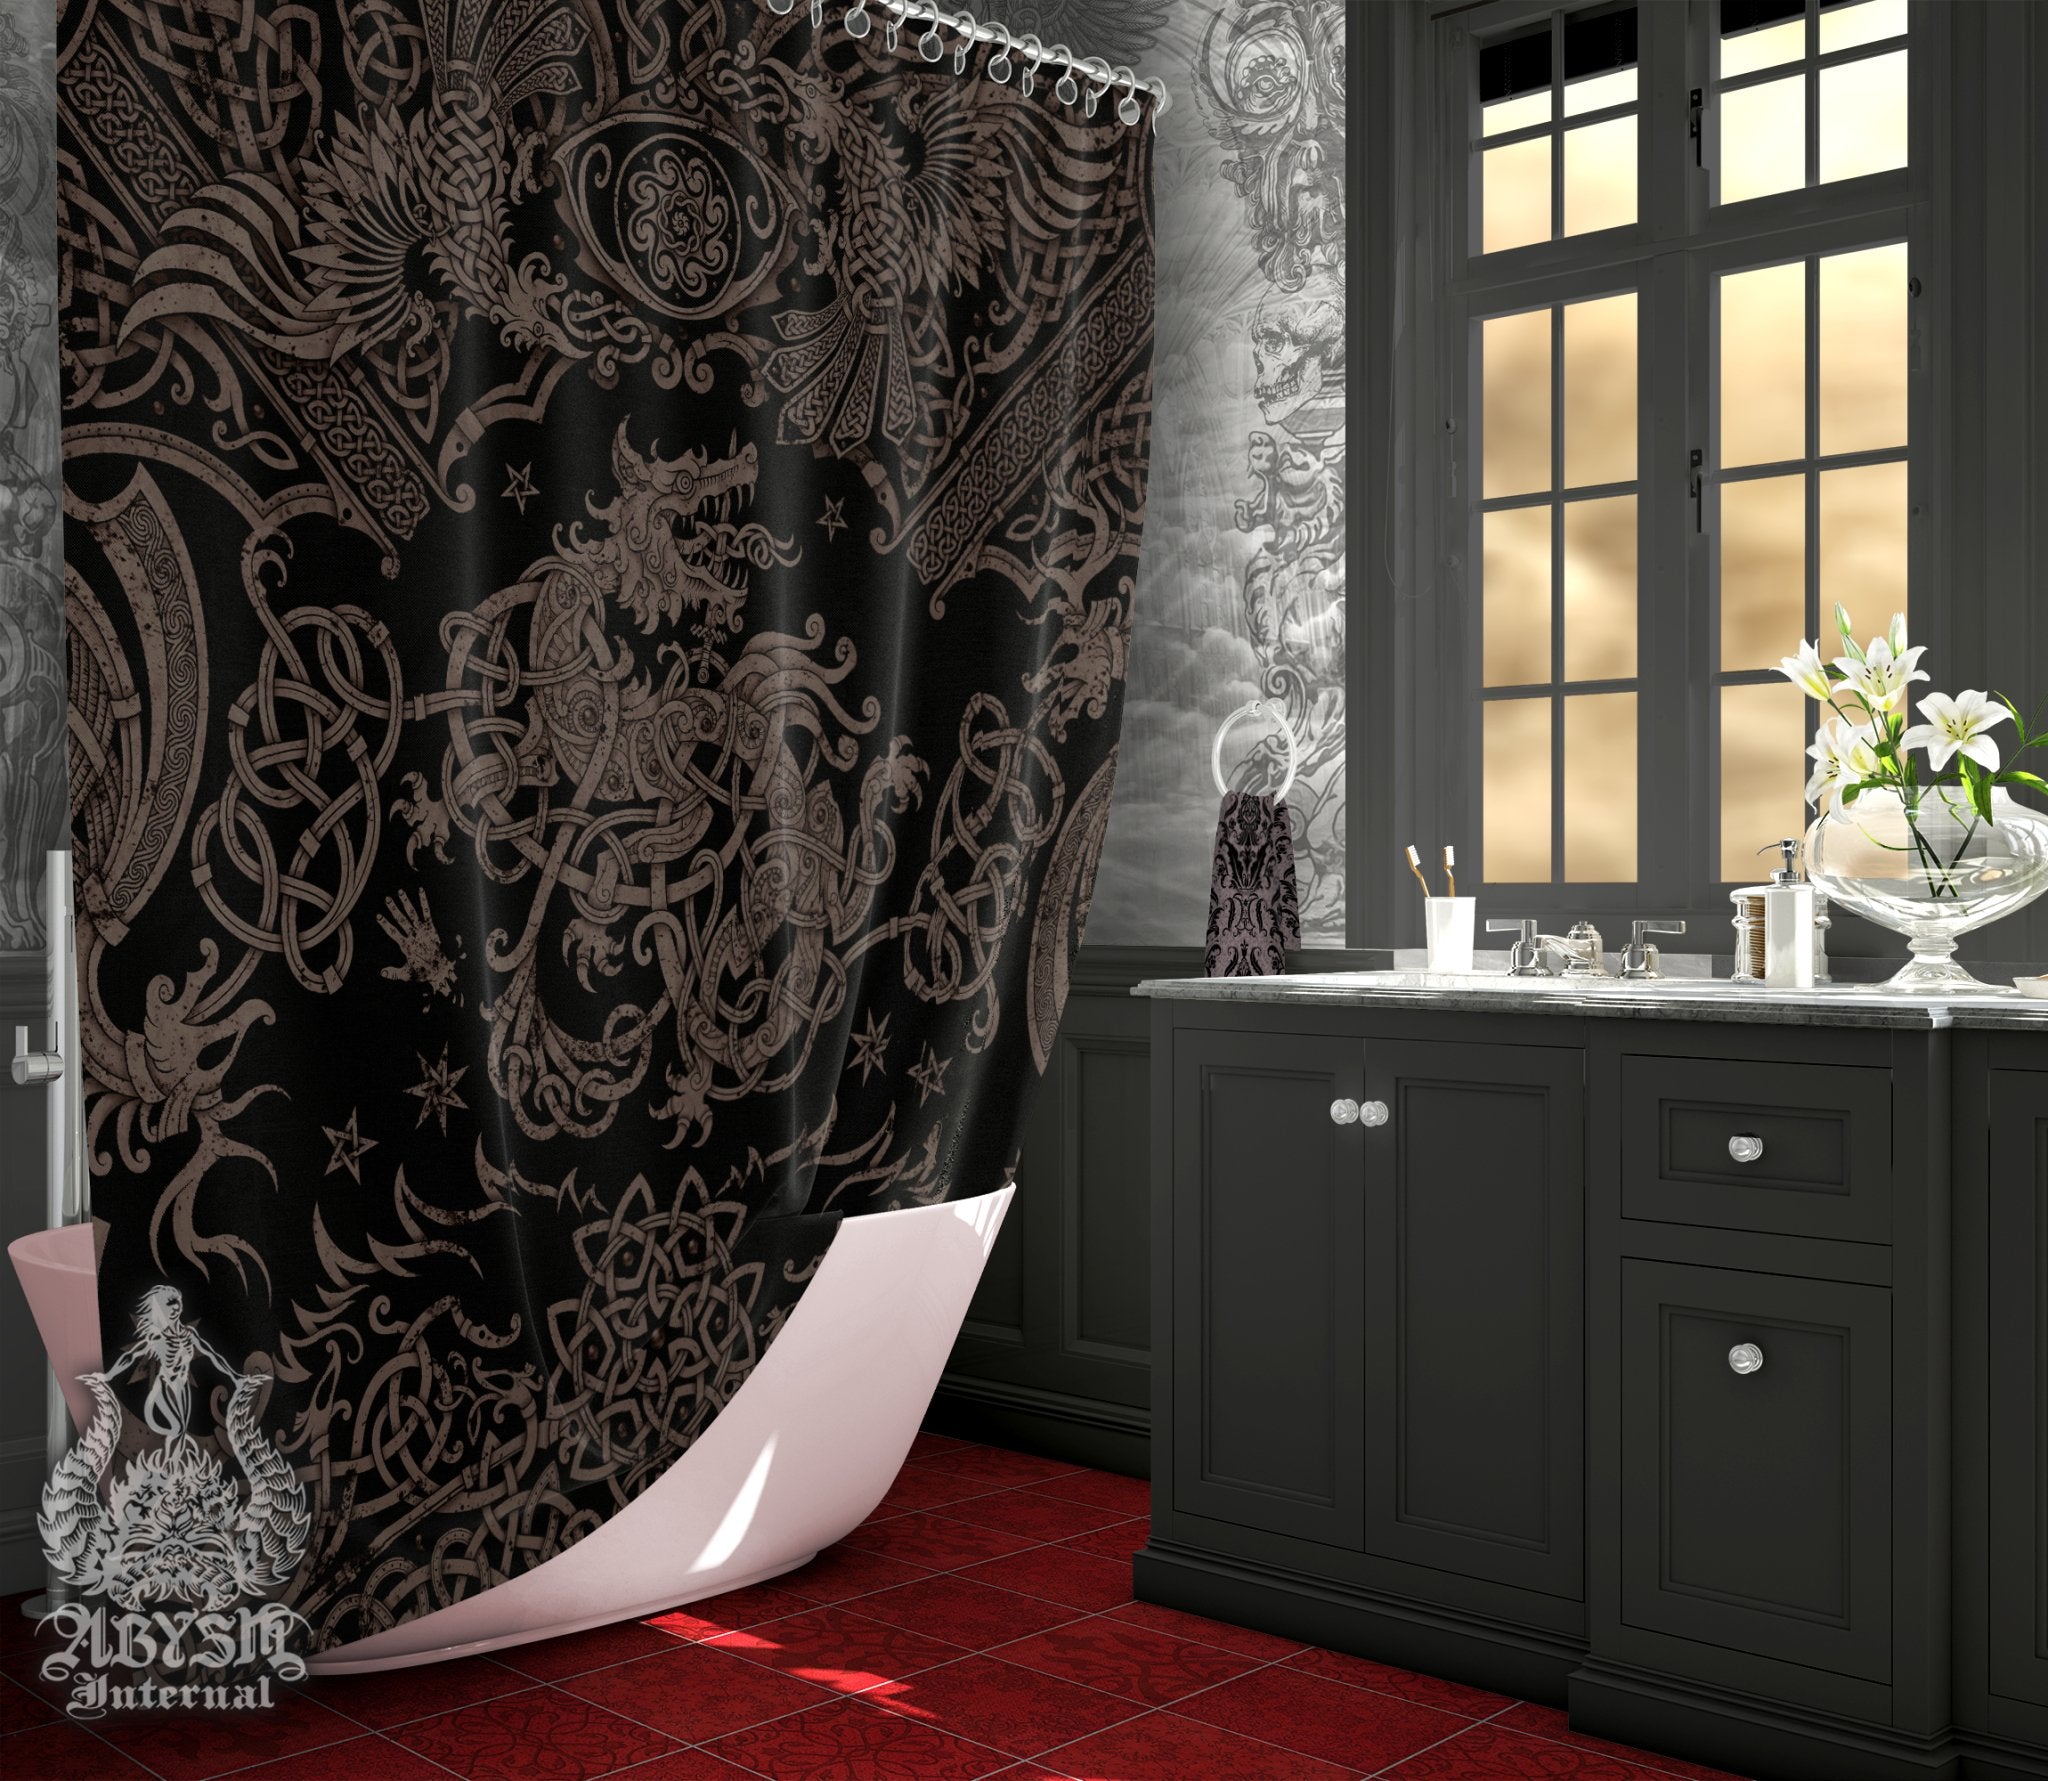 Fenrir Shower Curtain, 71x74 inches, Viking Bathroom Decor, Nordic Wolf Art Print, Old Norse Mythology - Black Grey Grit - Abysm Internal